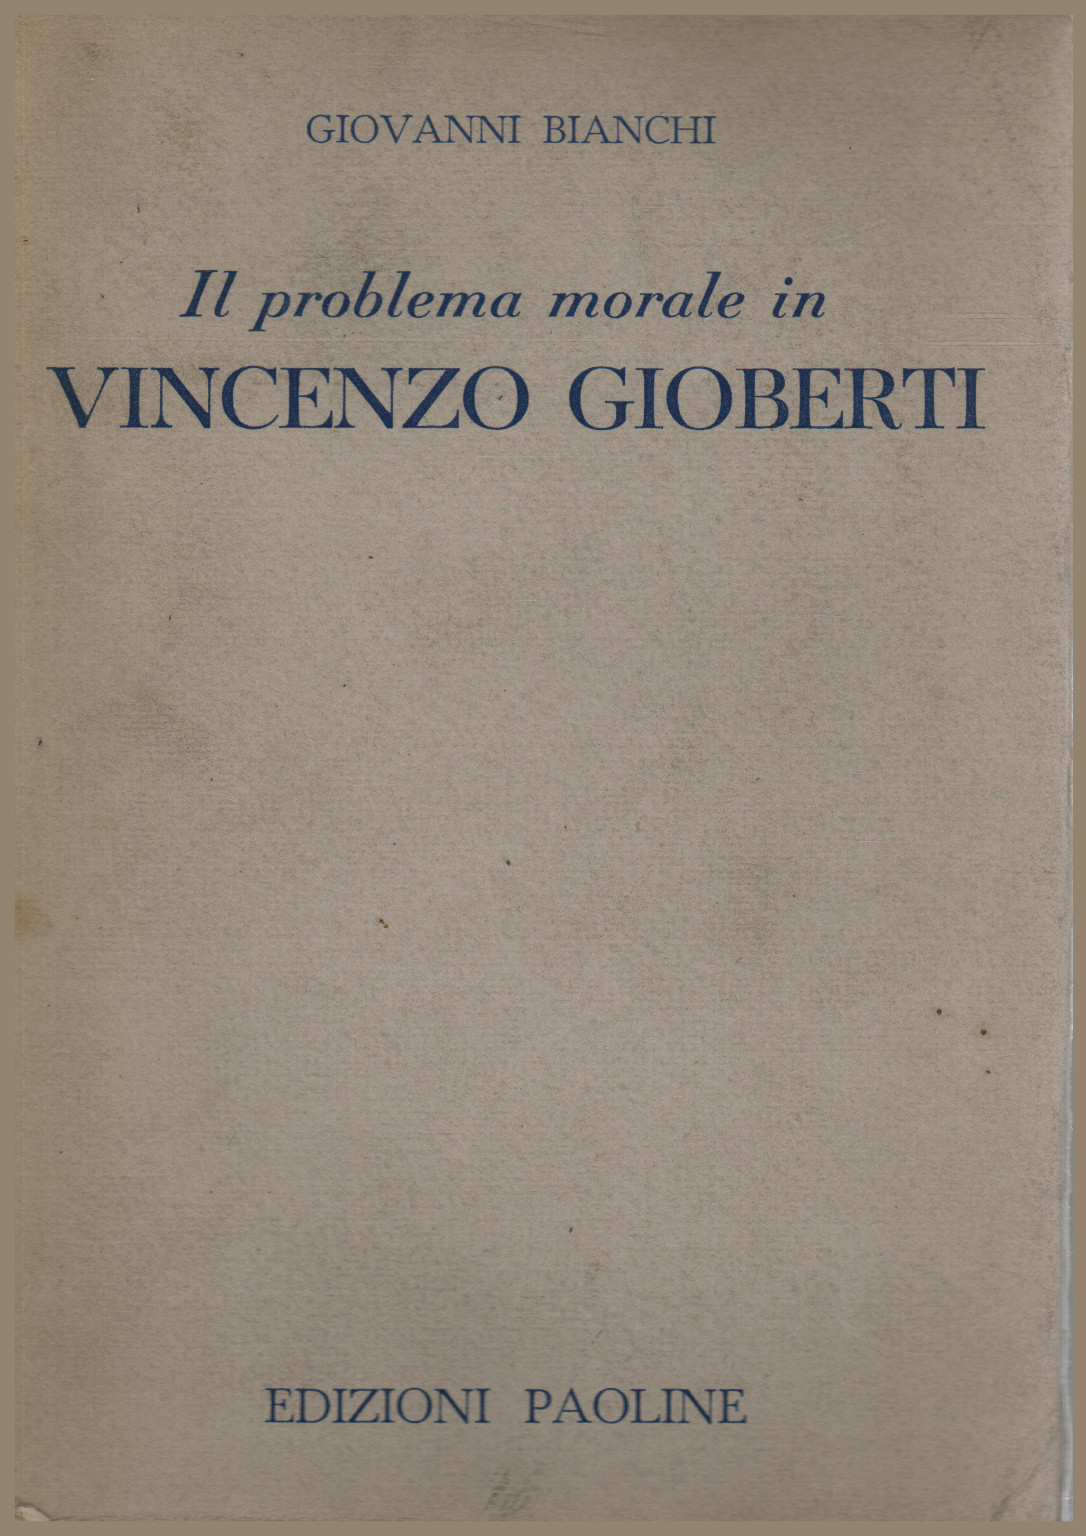 Le problème moral de Vincenzo Gioberti, s.un.